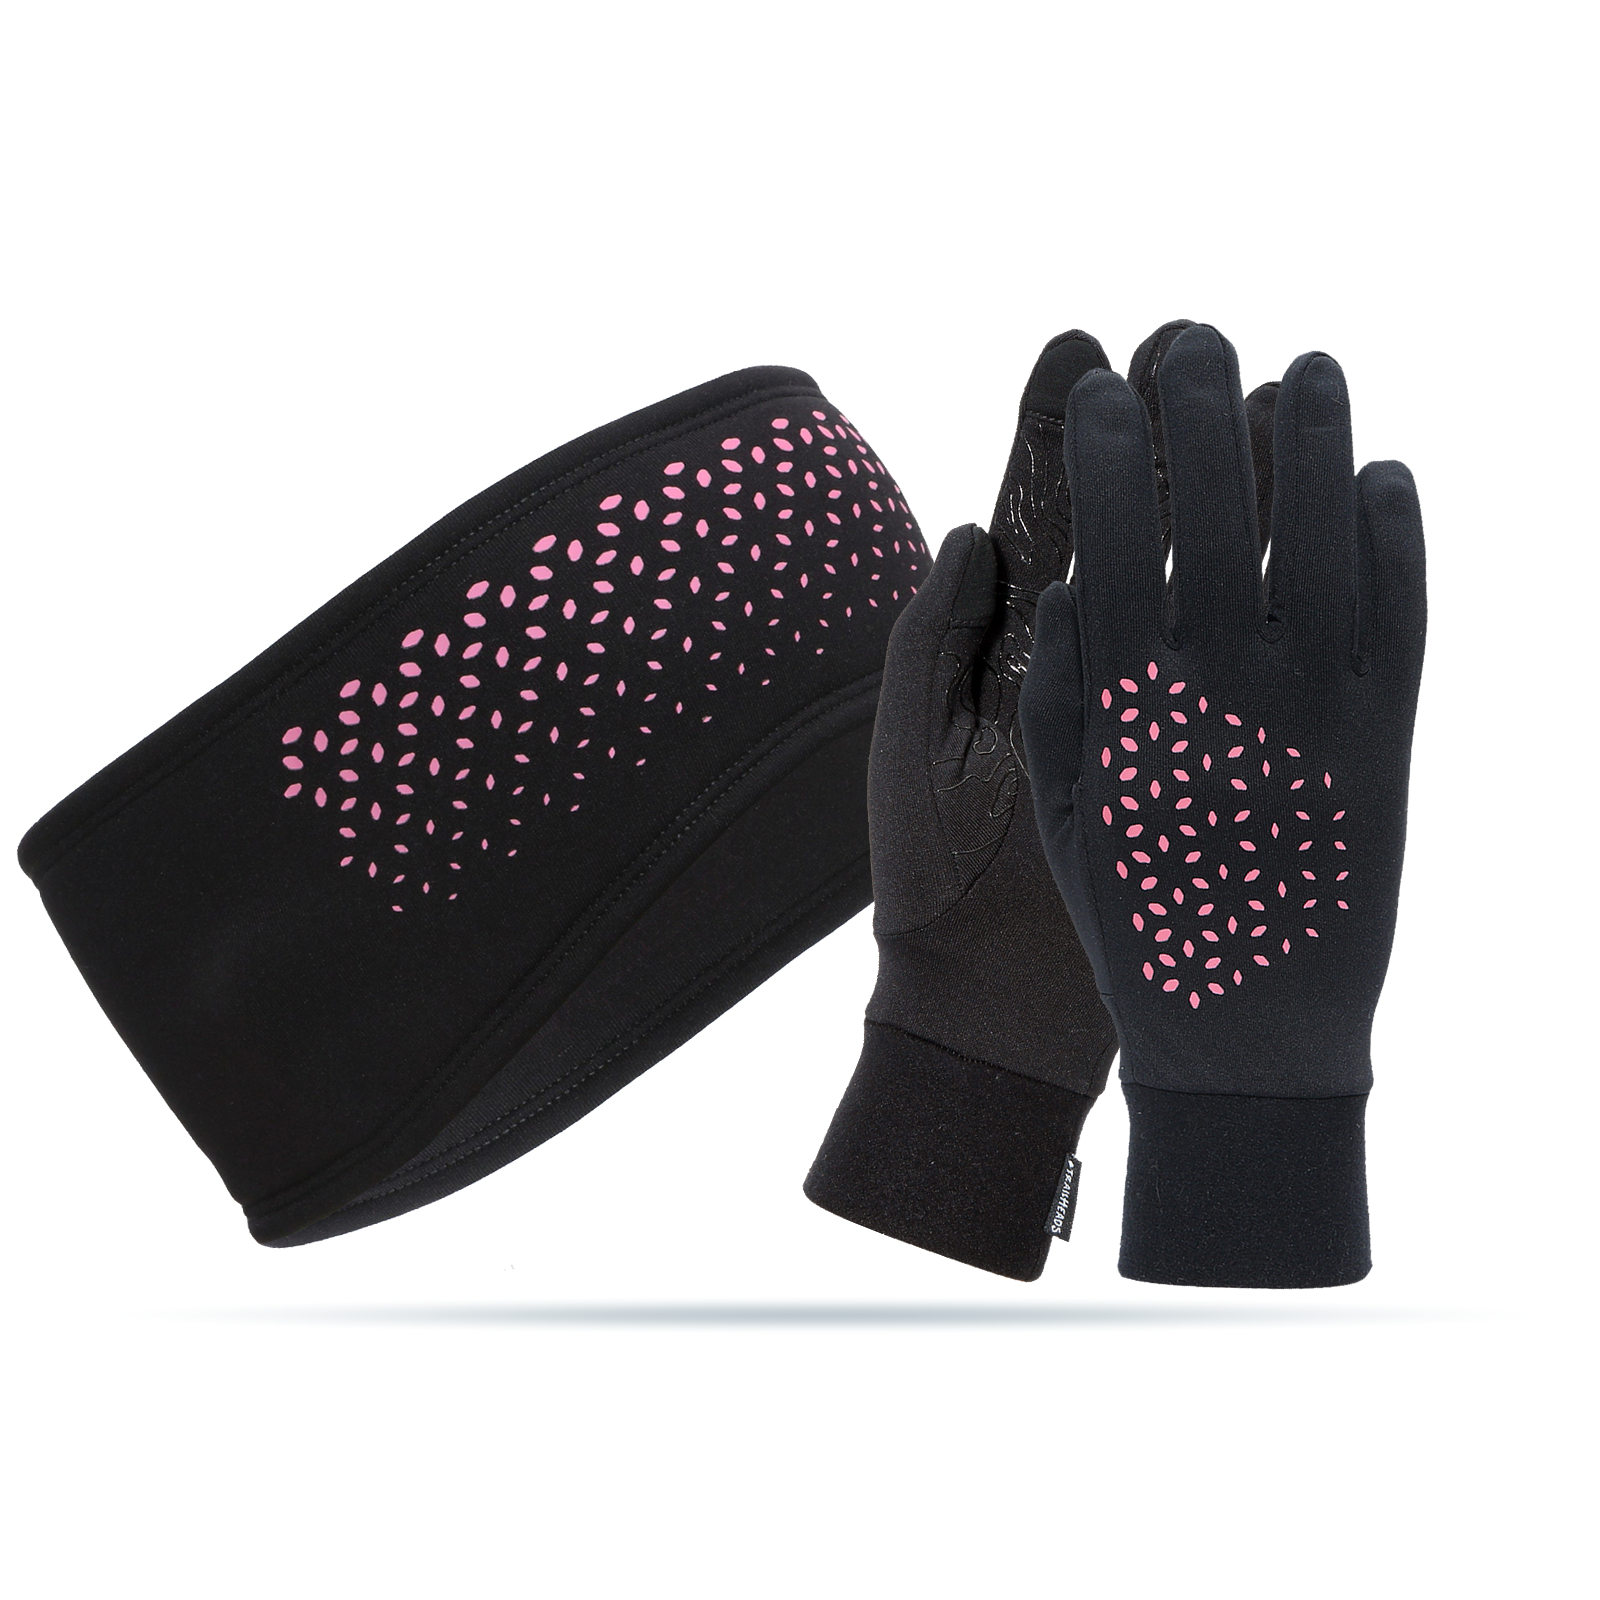 Women's Reflective Running Headband and Gloves